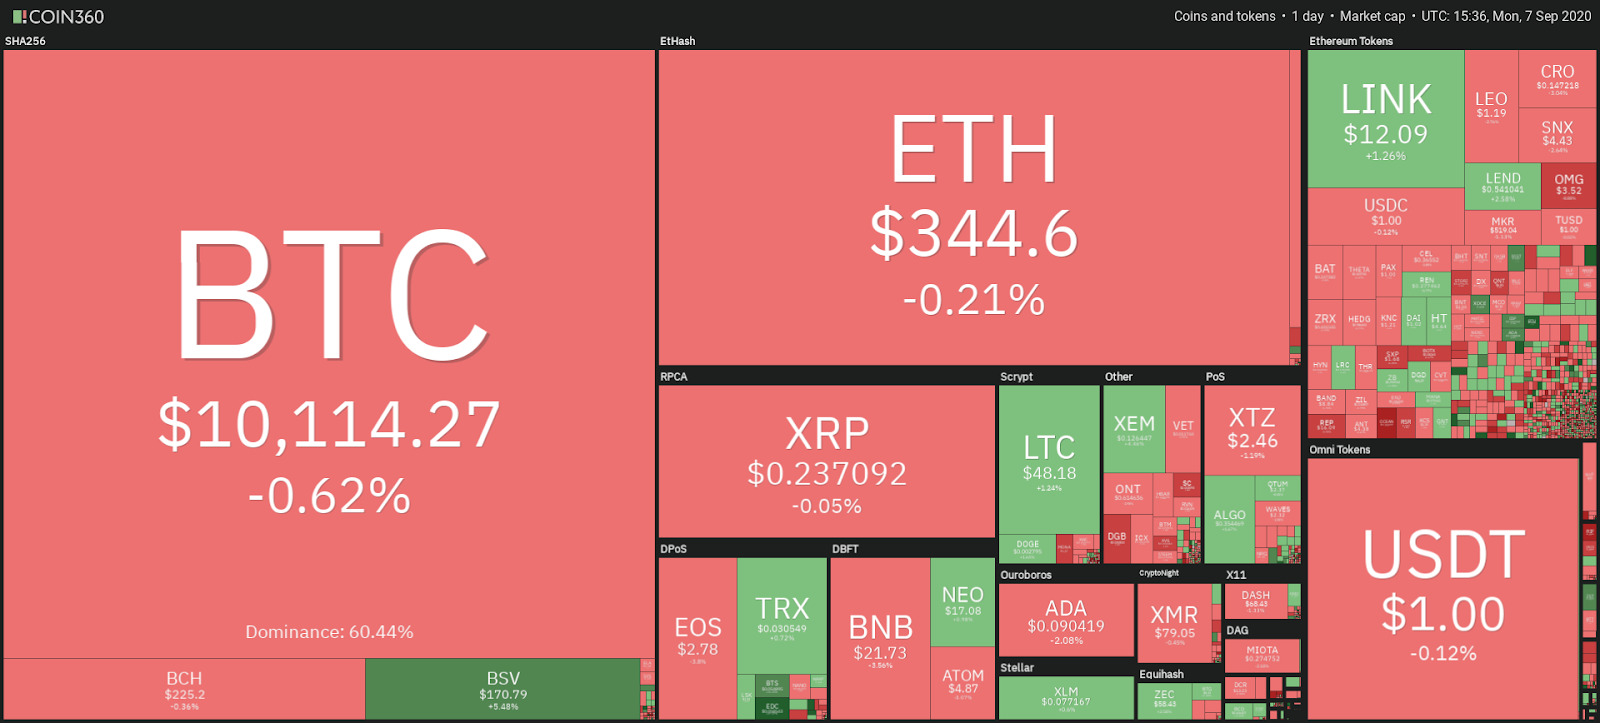 Crypto market daily performance snapshot